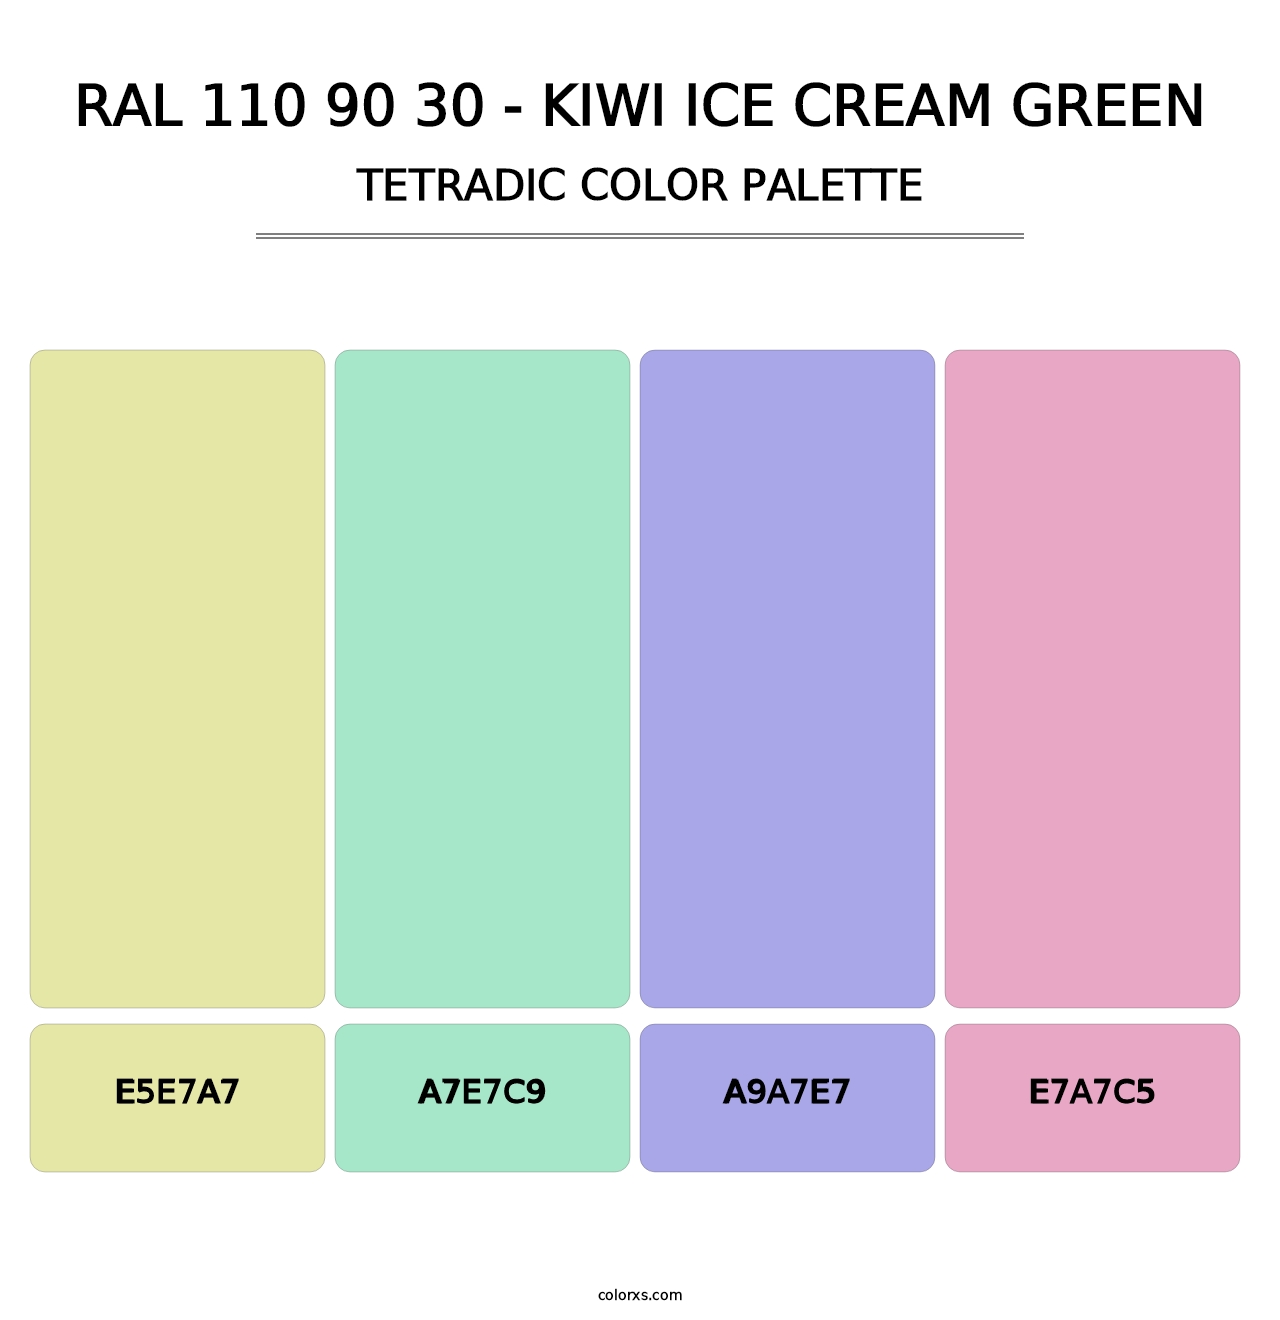 RAL 110 90 30 - Kiwi Ice Cream Green - Tetradic Color Palette